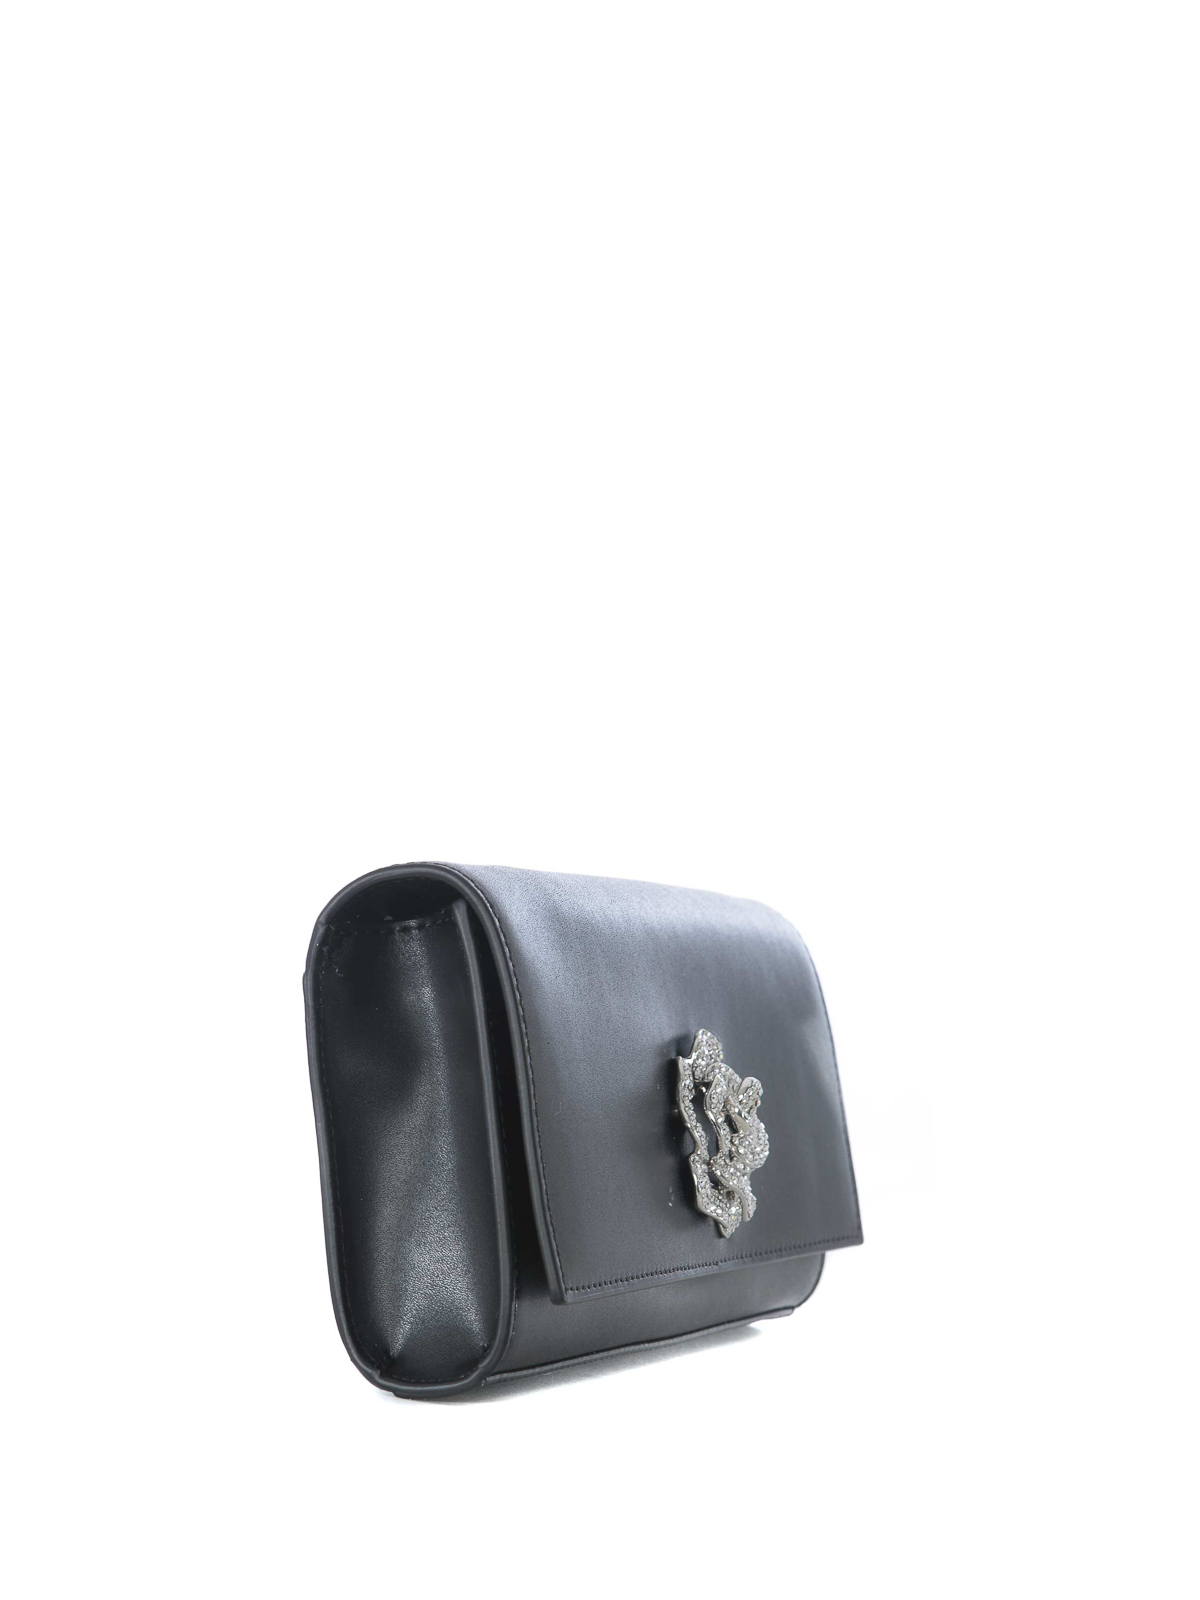 bellamie embellished leather clutch